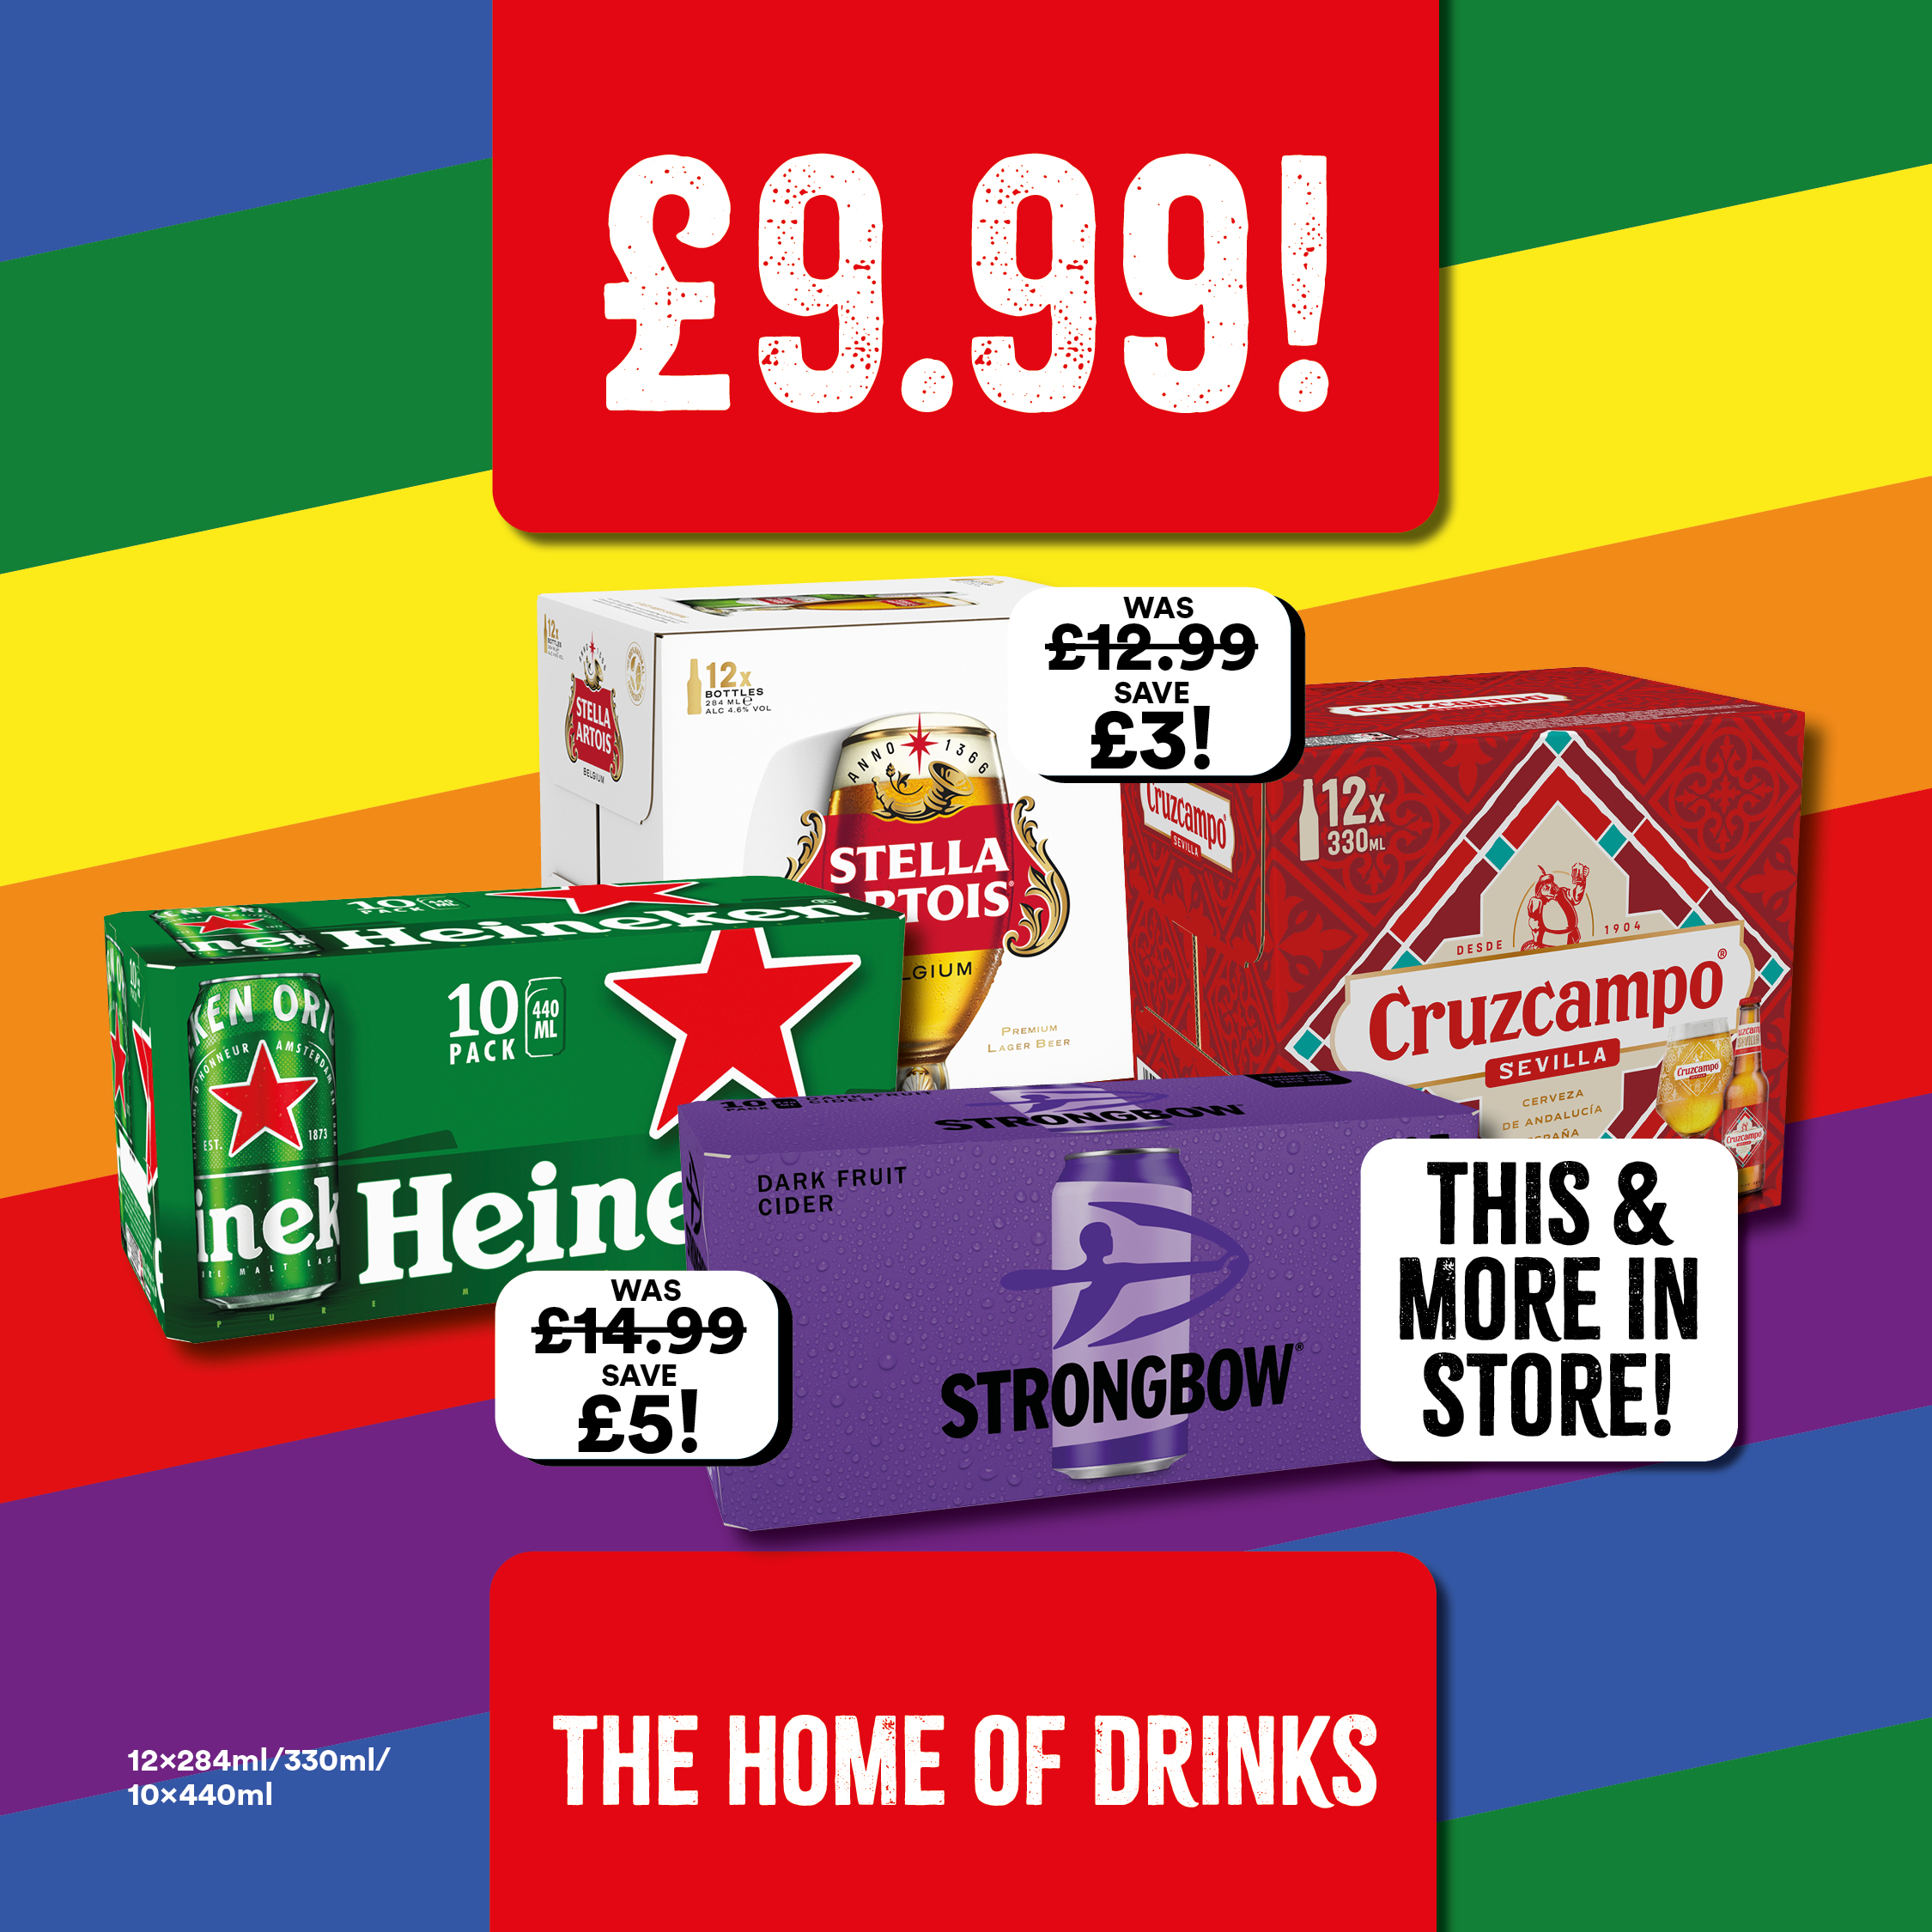 £9.99 on beer big packs Bargain Booze Liverpool 01515 211098